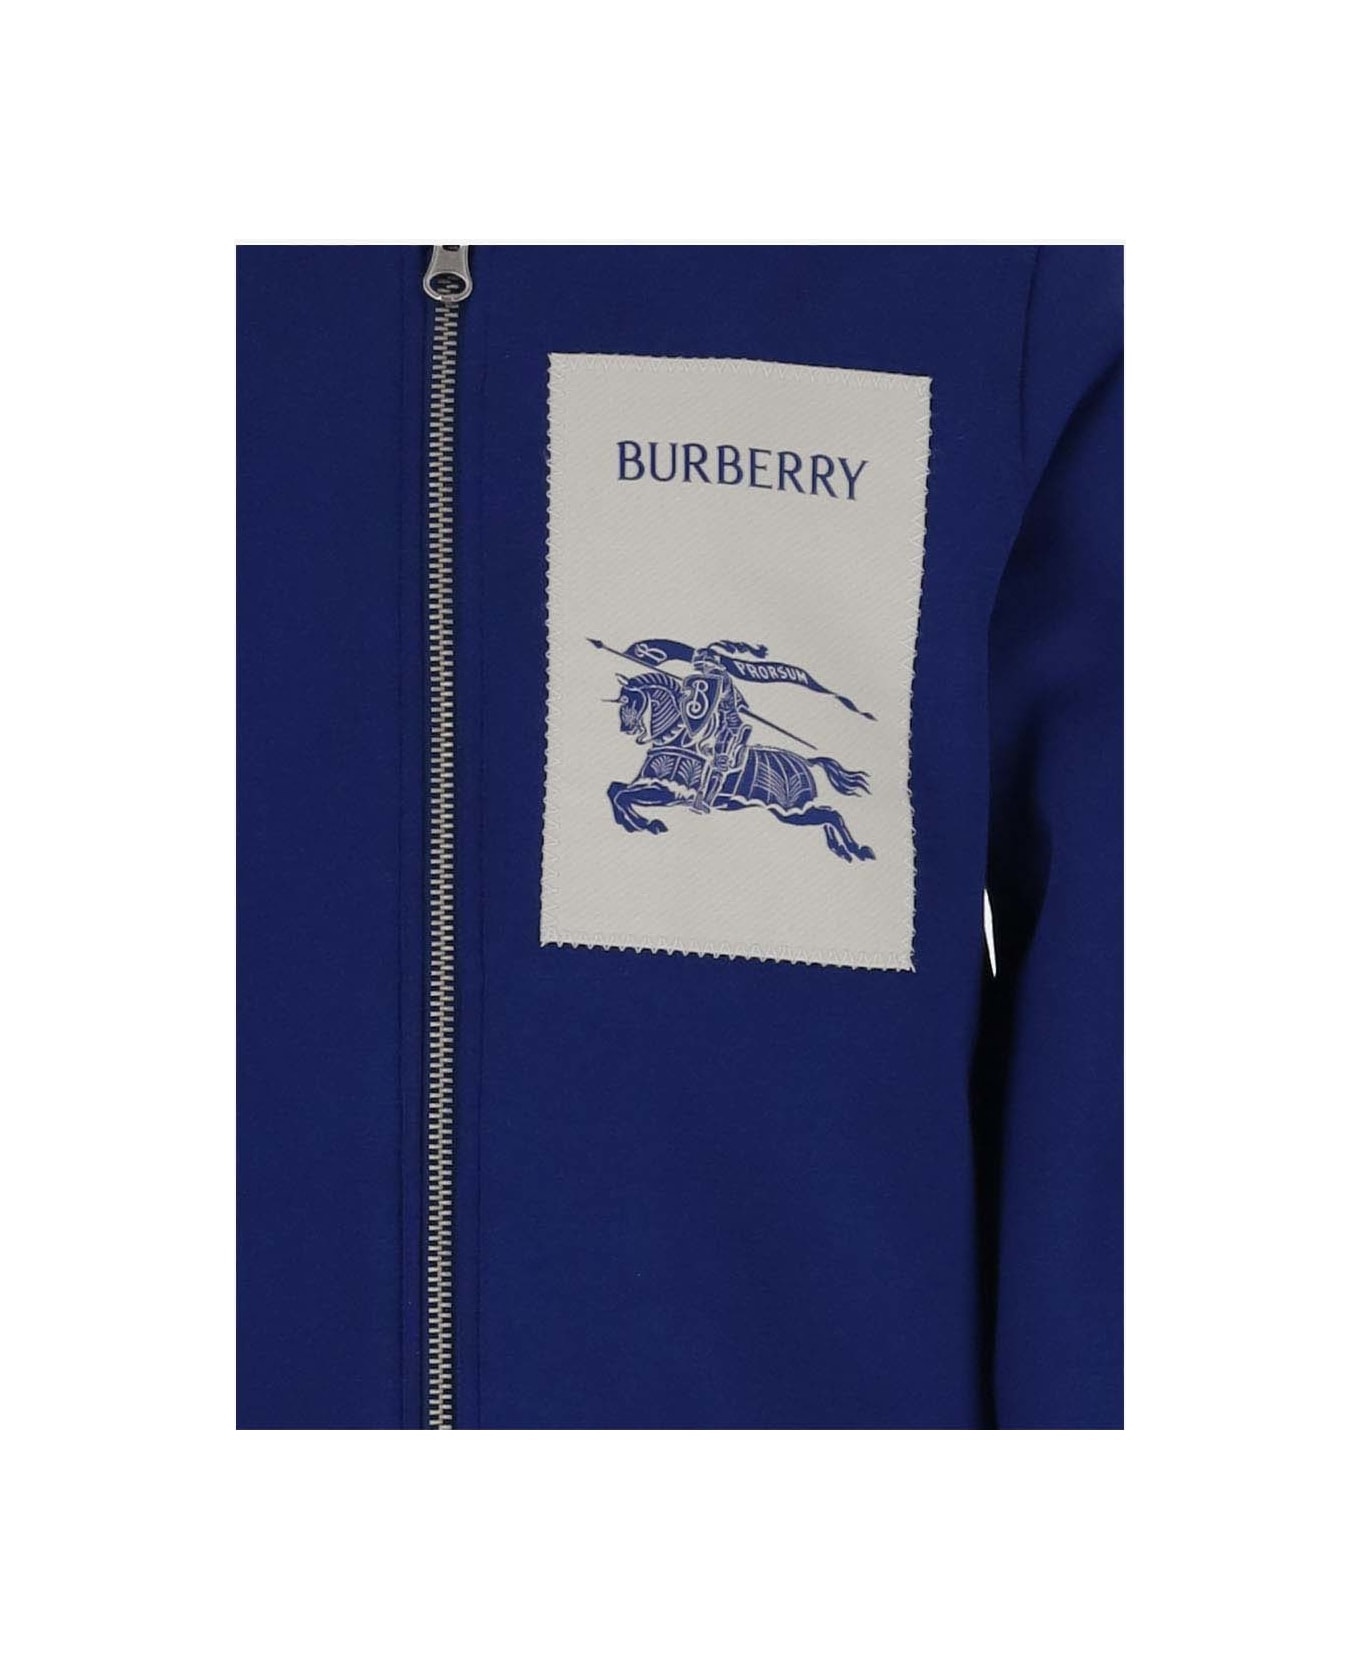 Burberry Cotton Logo Sweatshirt - Blue ニットウェア＆スウェットシャツ